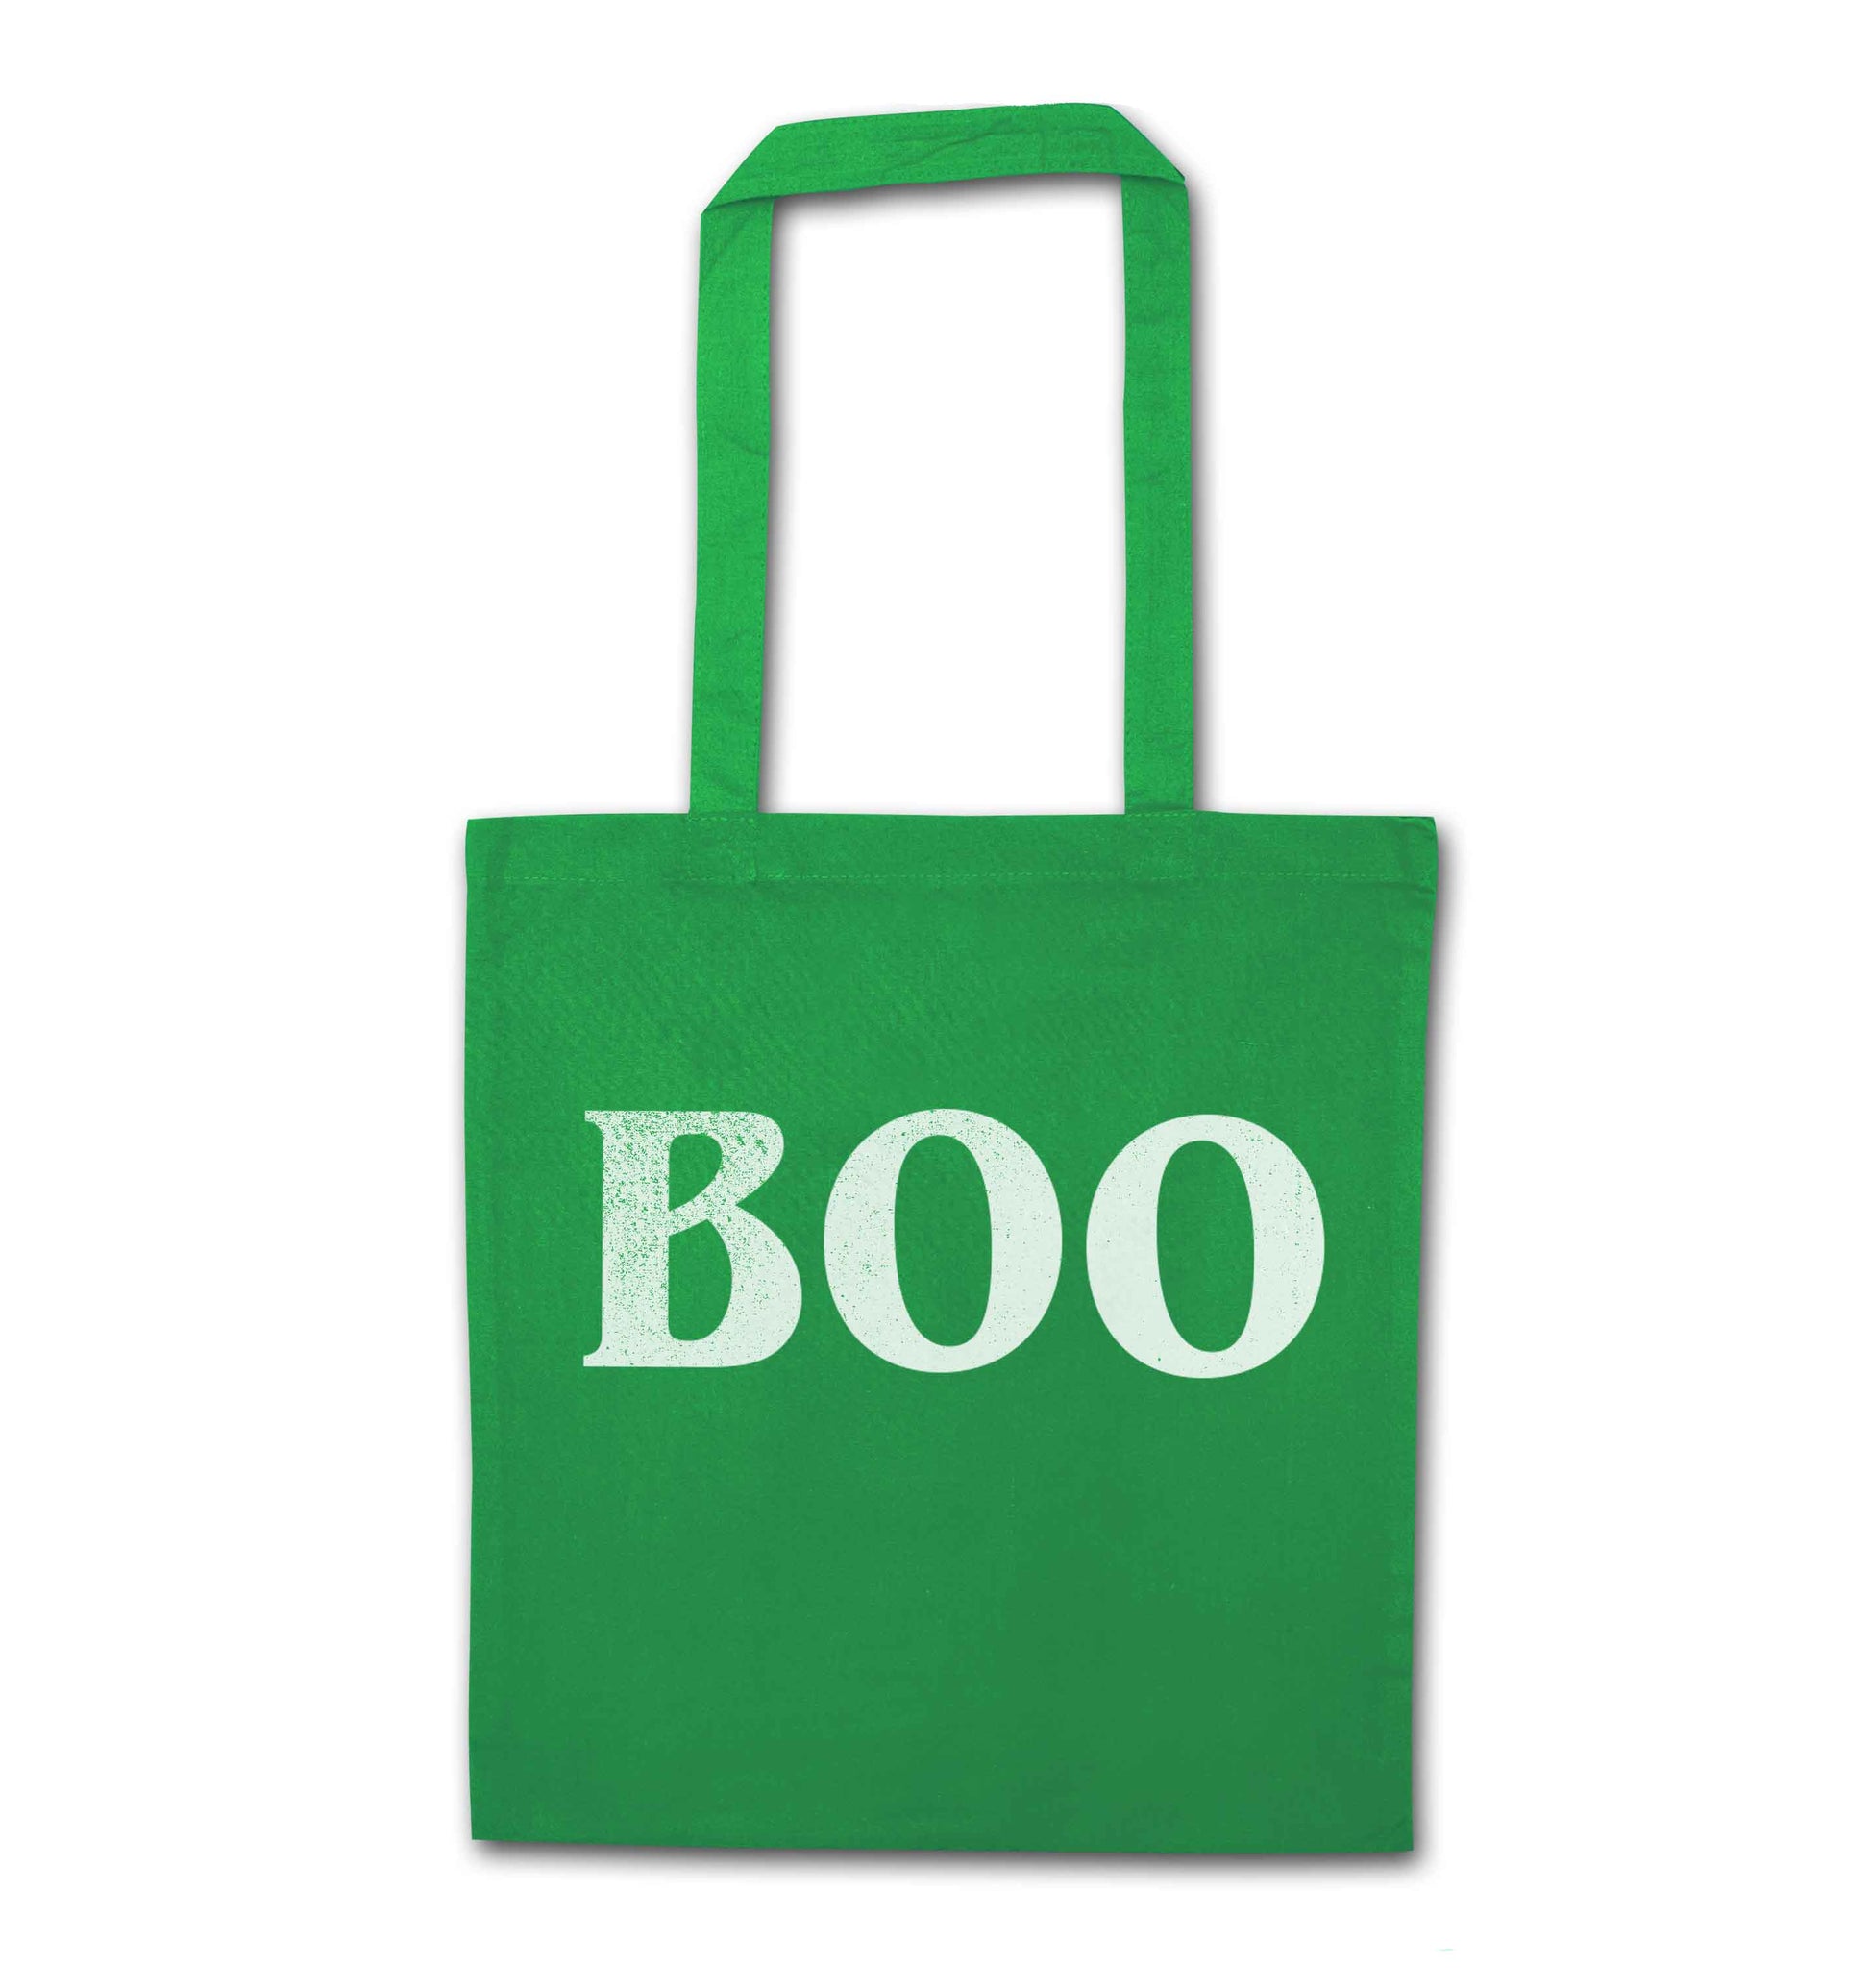 Boo green tote bag